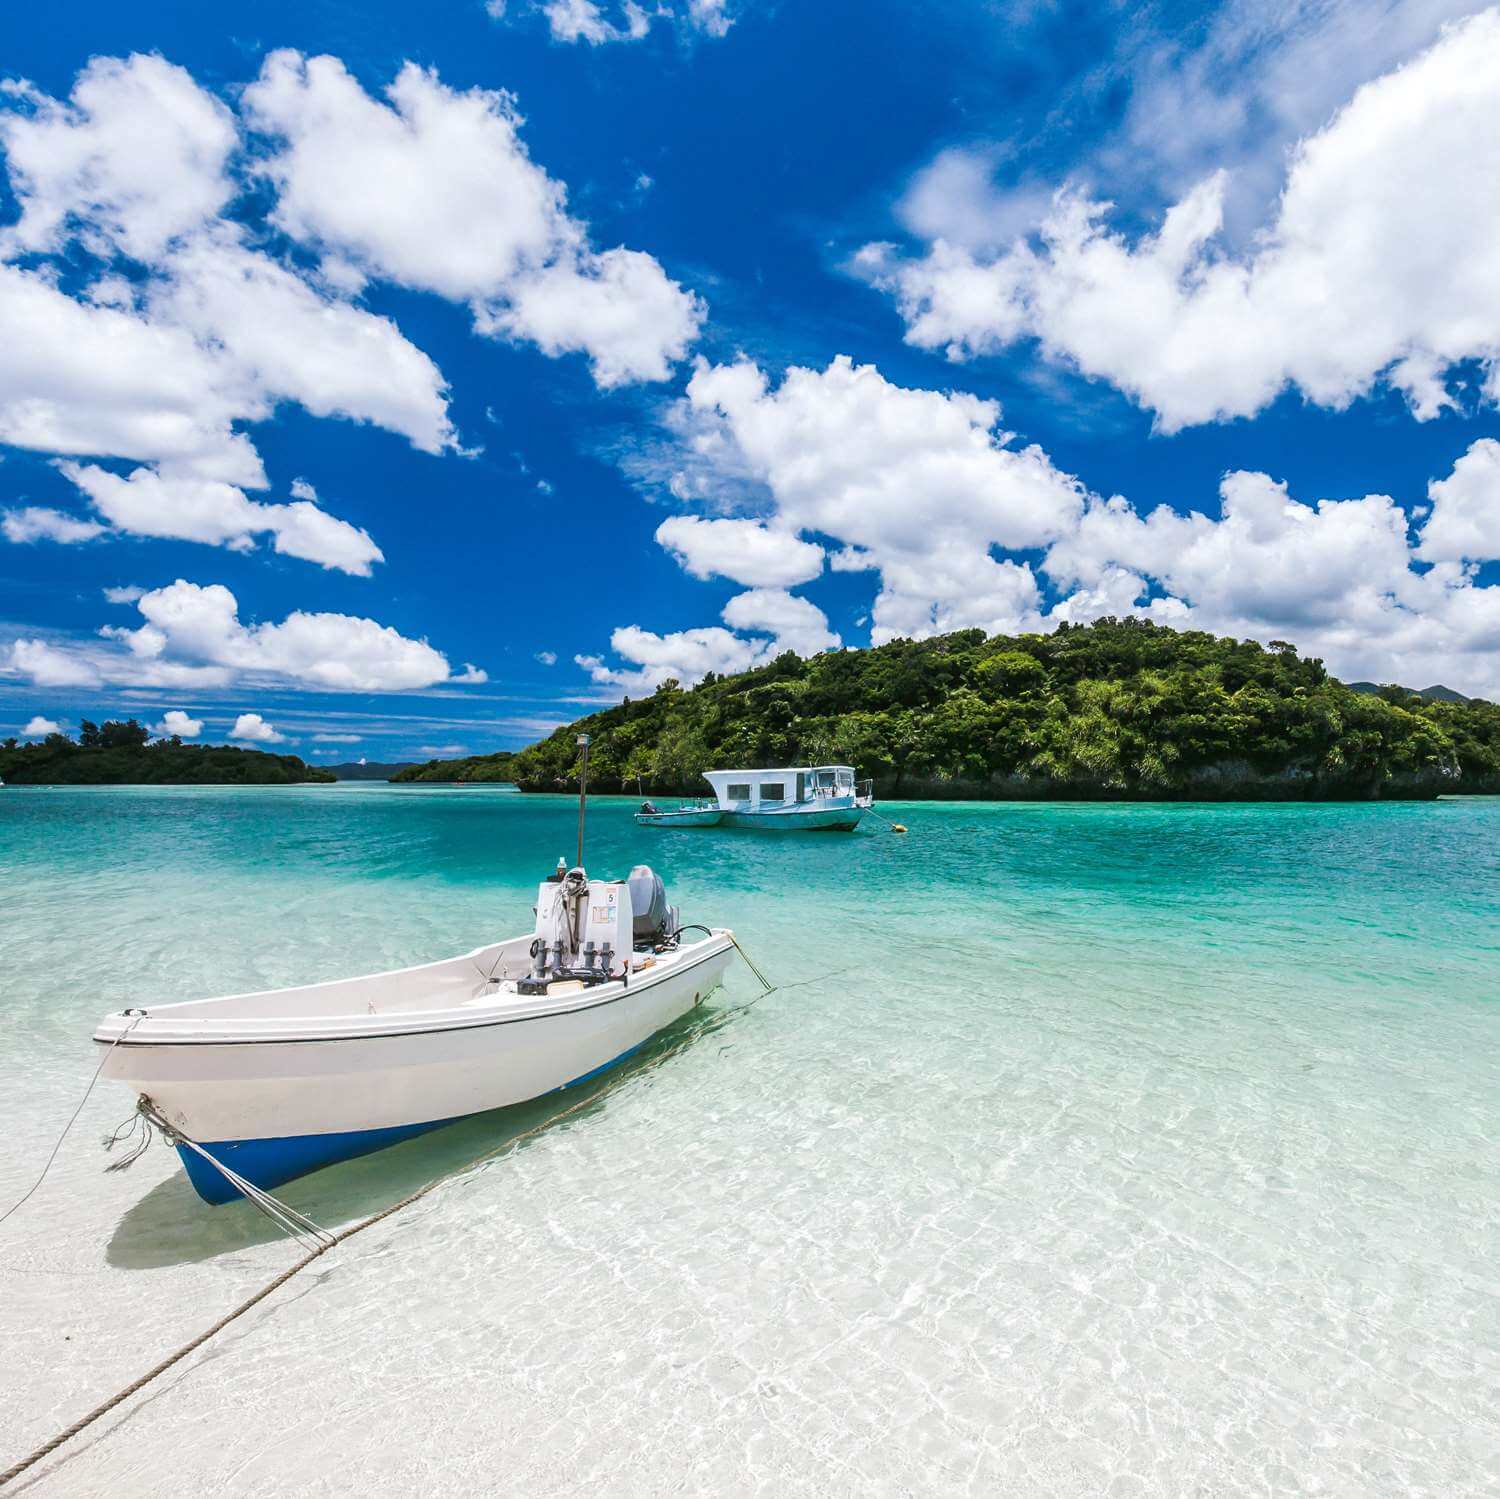 The Clear Sea of Ishigaki Island, Okinawa = Shutterstock